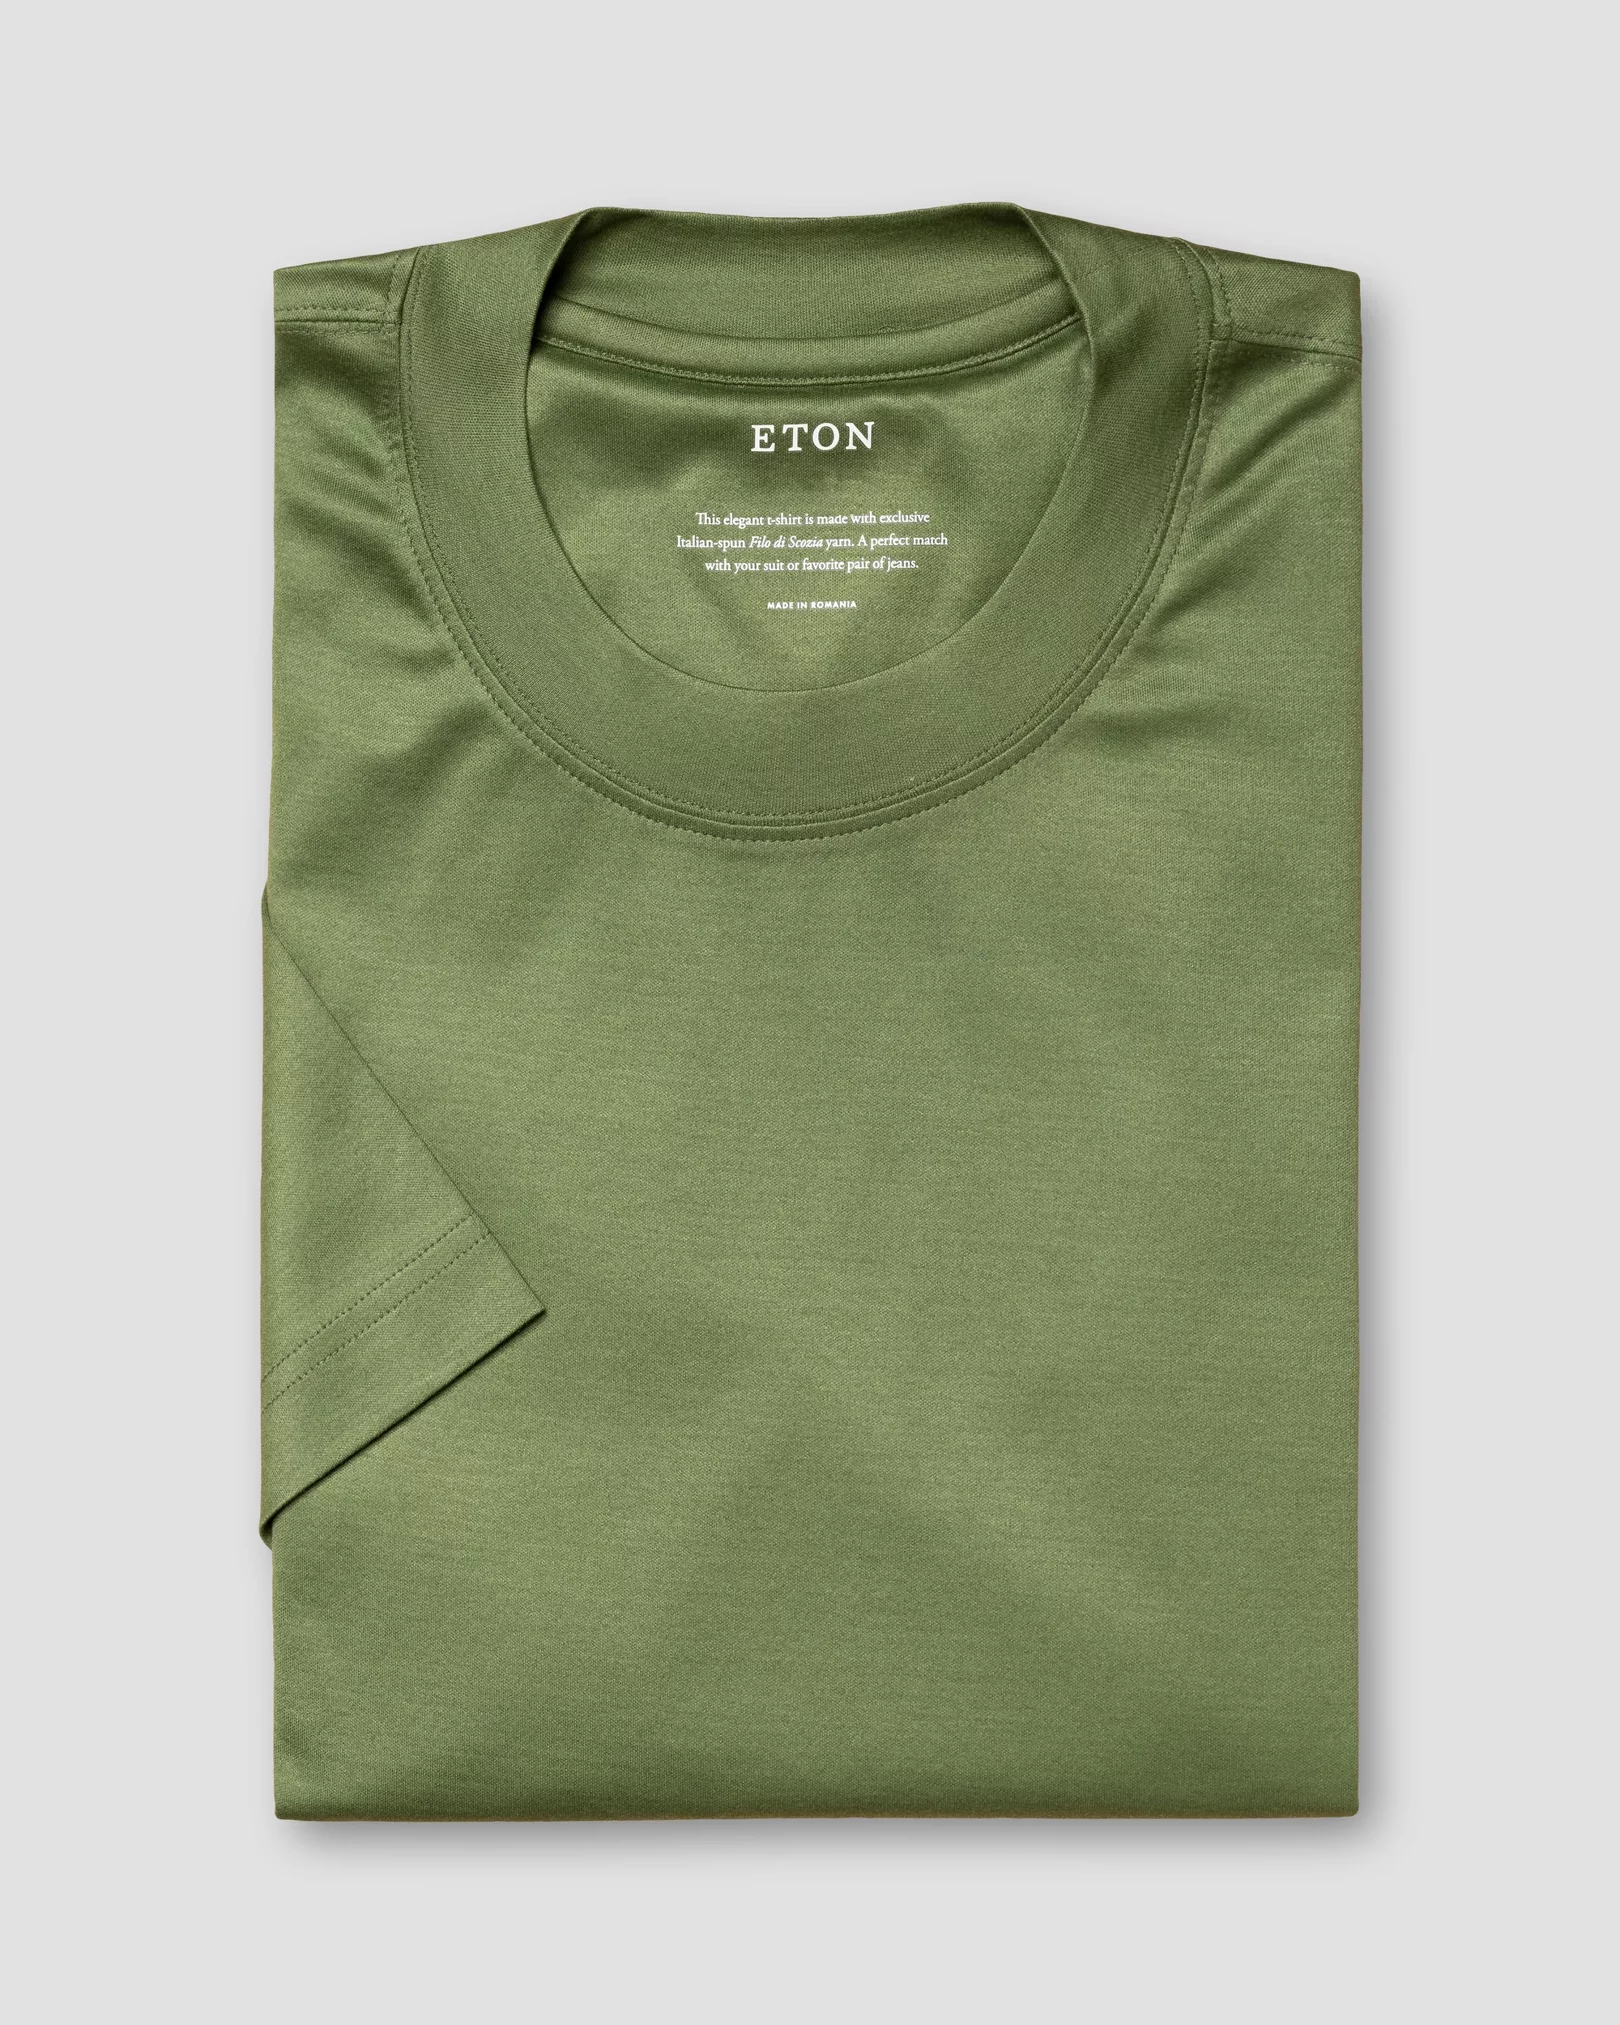 Eton - mid green jersey t shirt short sleeve boxfit t shirt